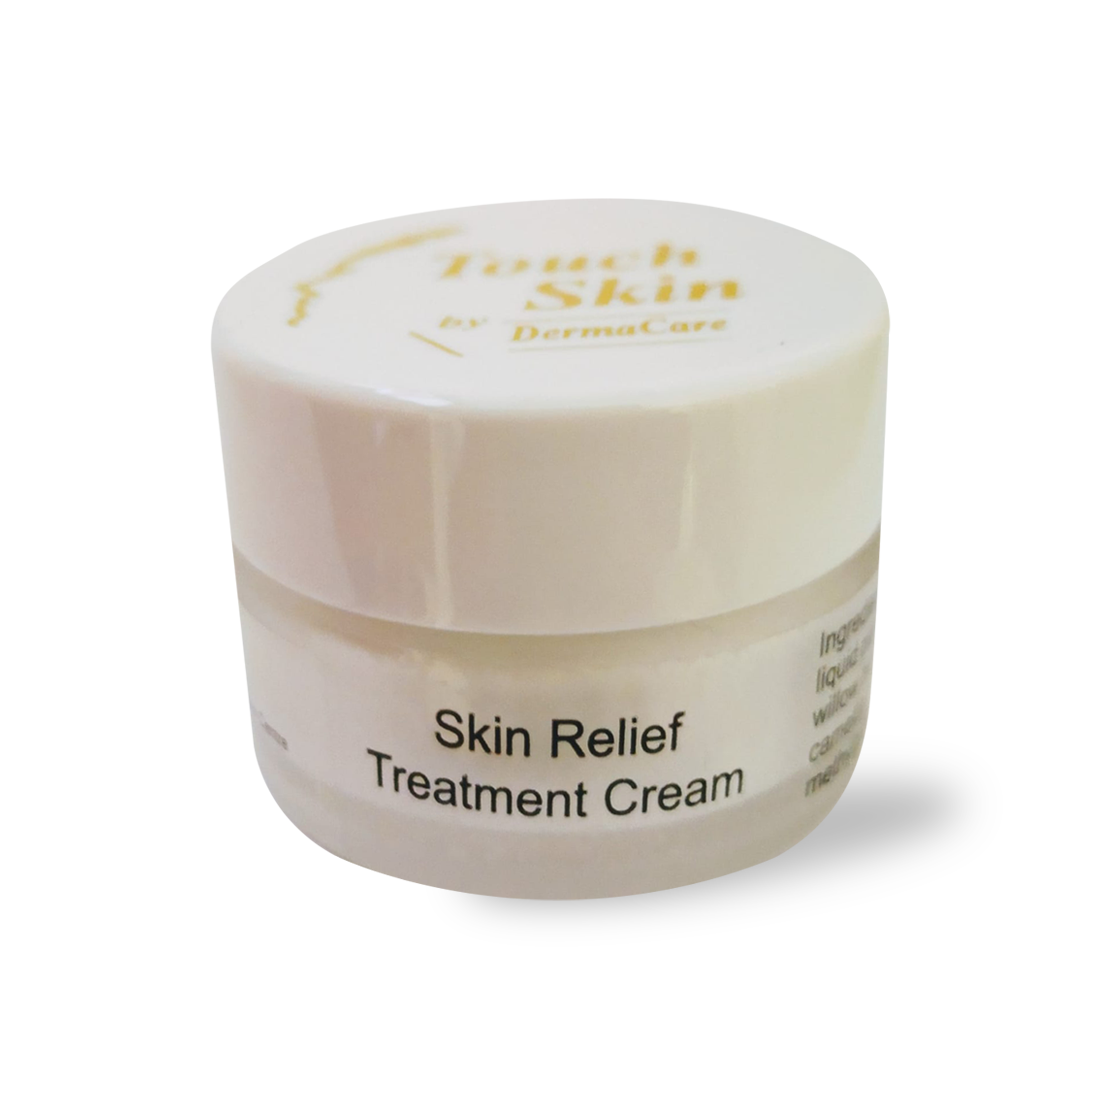 Skin Relief Treatment Cream - Dermacare Therapeutic Skincare